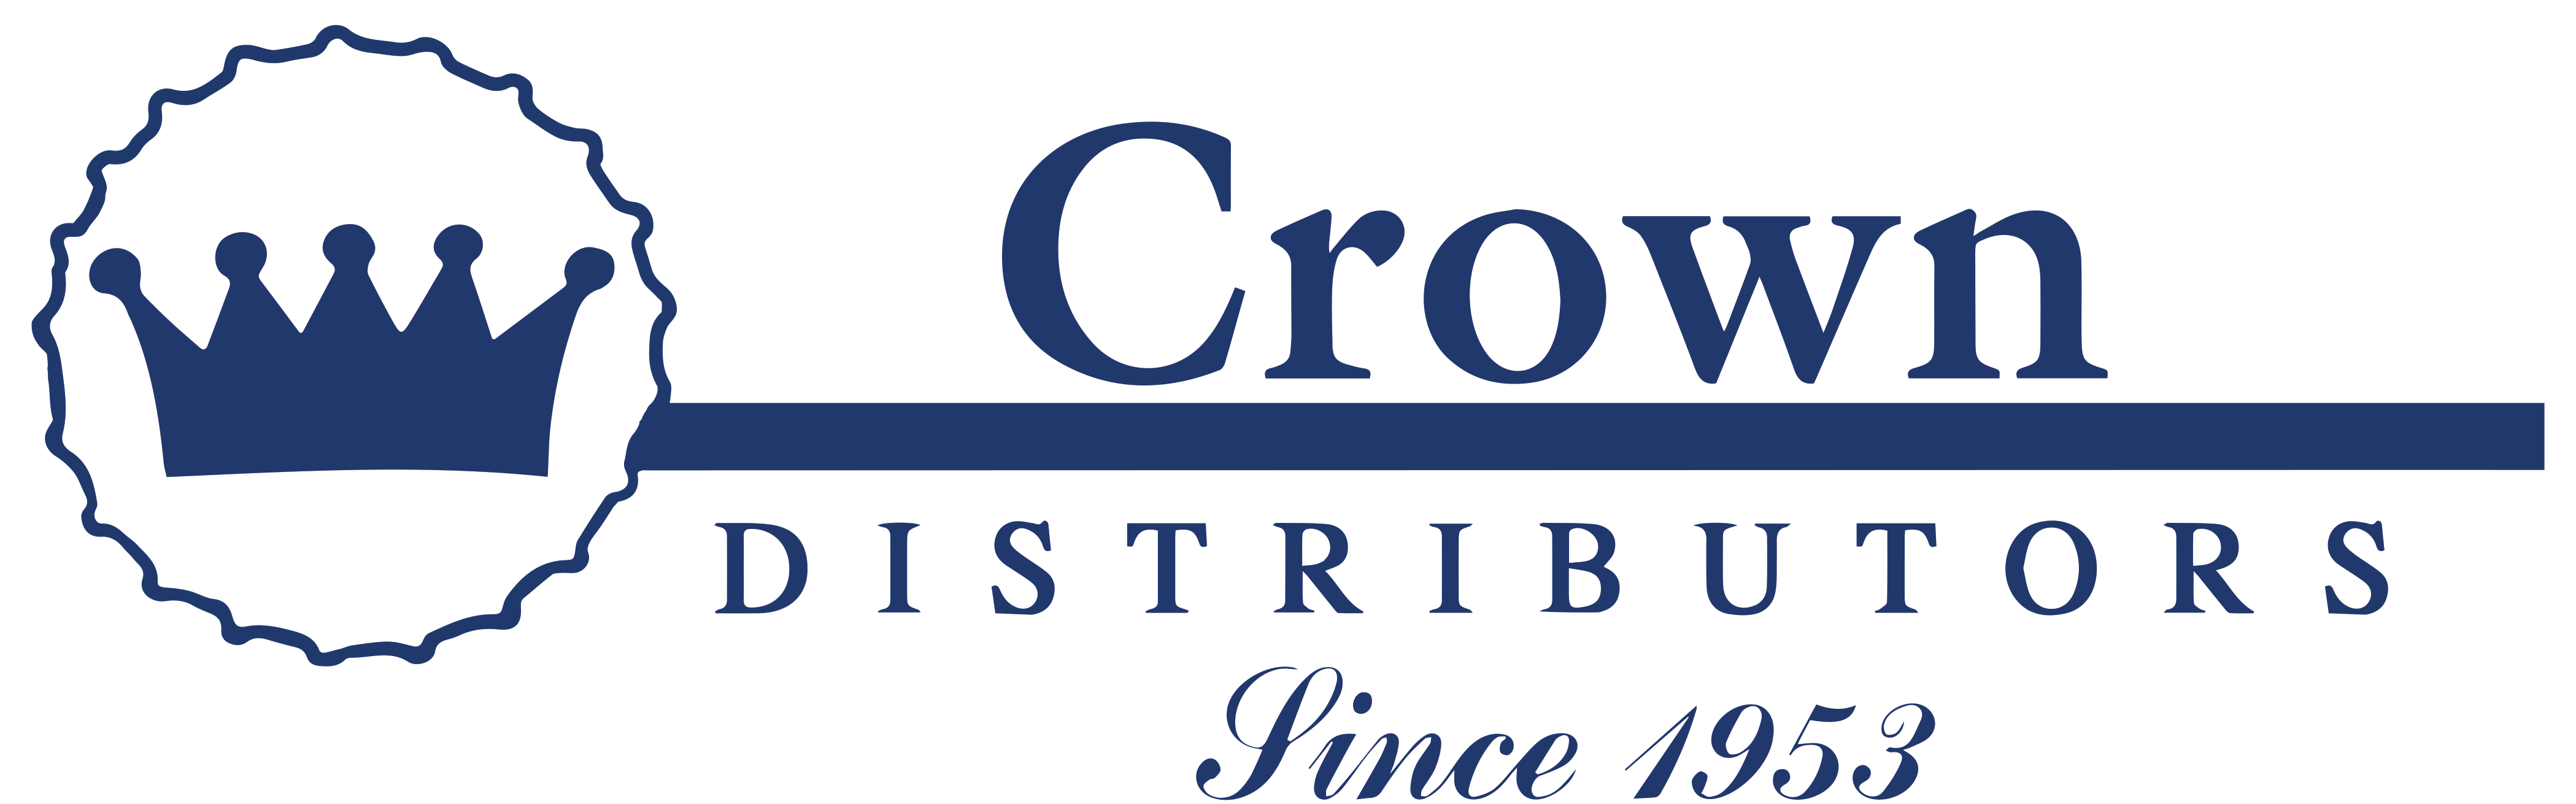 Crown Distributors